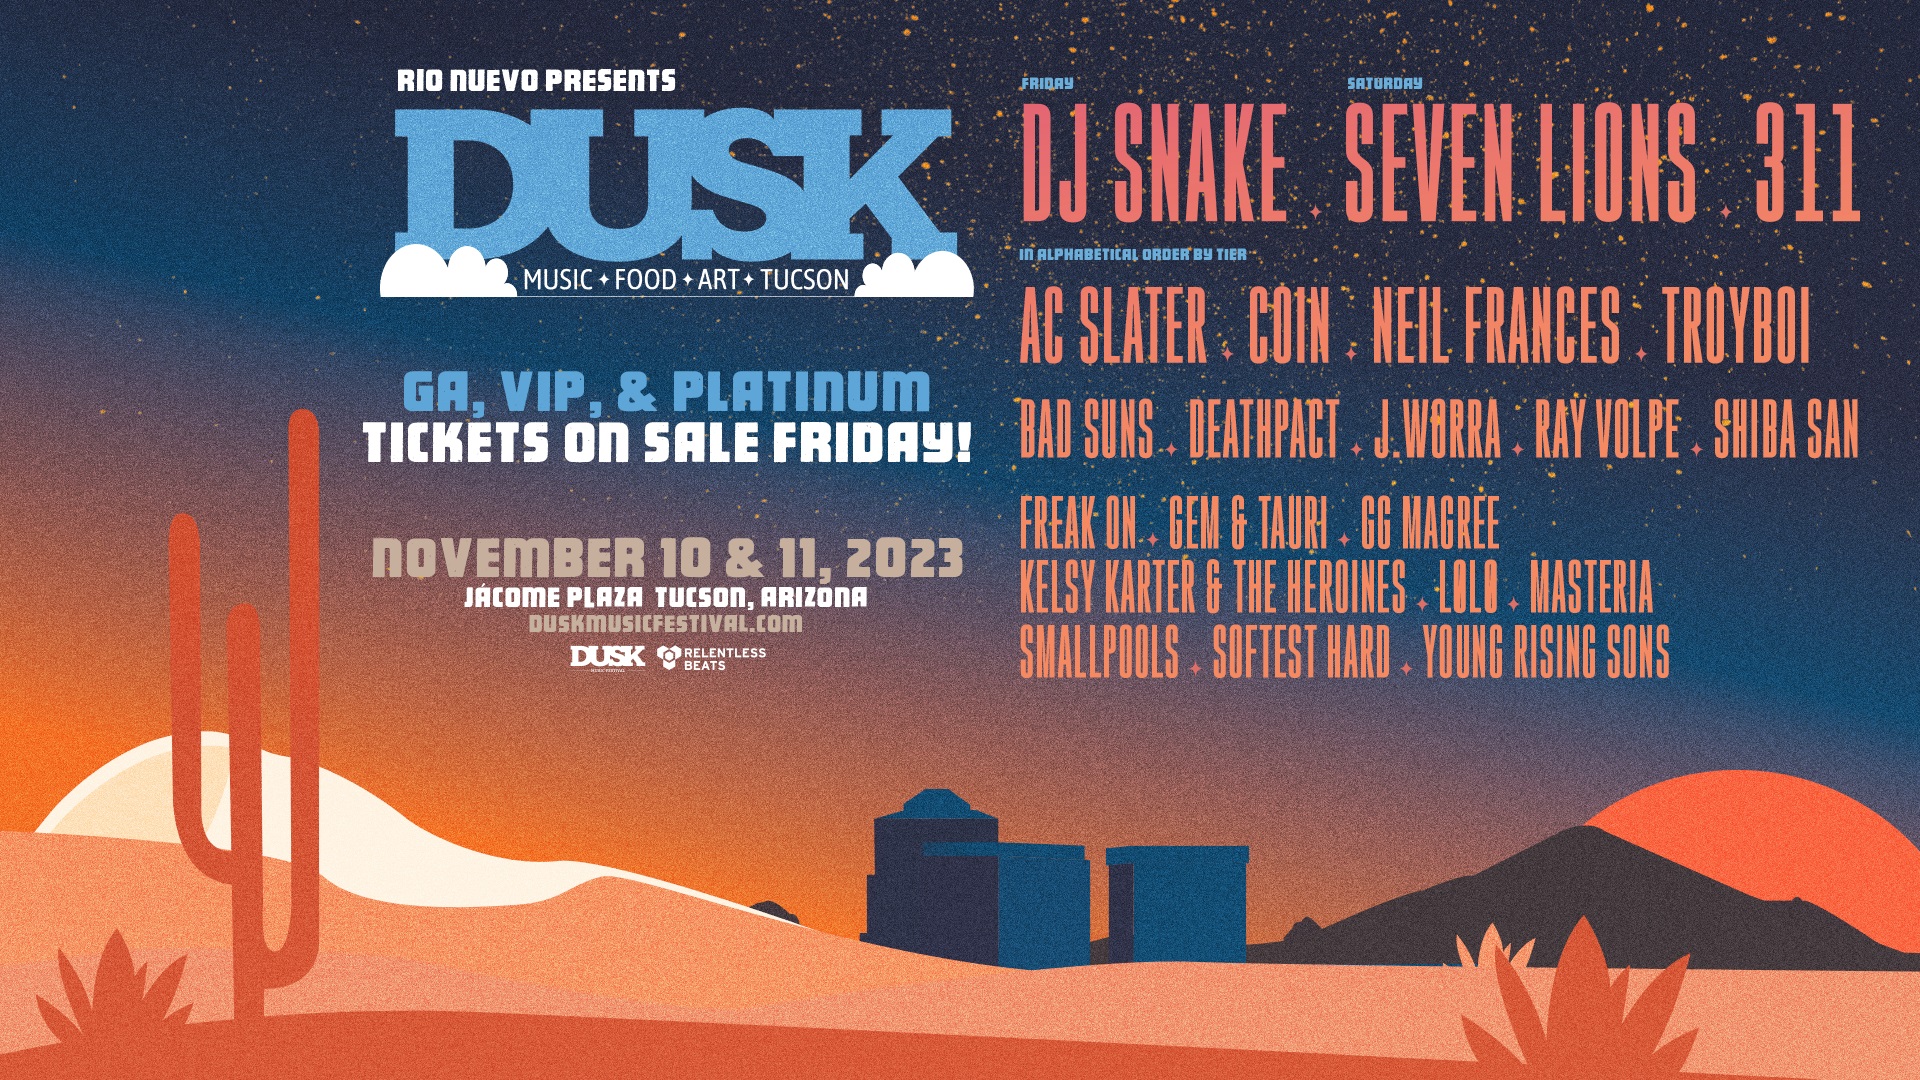 DUSK MUSIC FESTIVAL ANNOUNCES LINEUP FOR SEVENTH ANNUAL EVENT, NOVEMBER 10 & 11, 2023